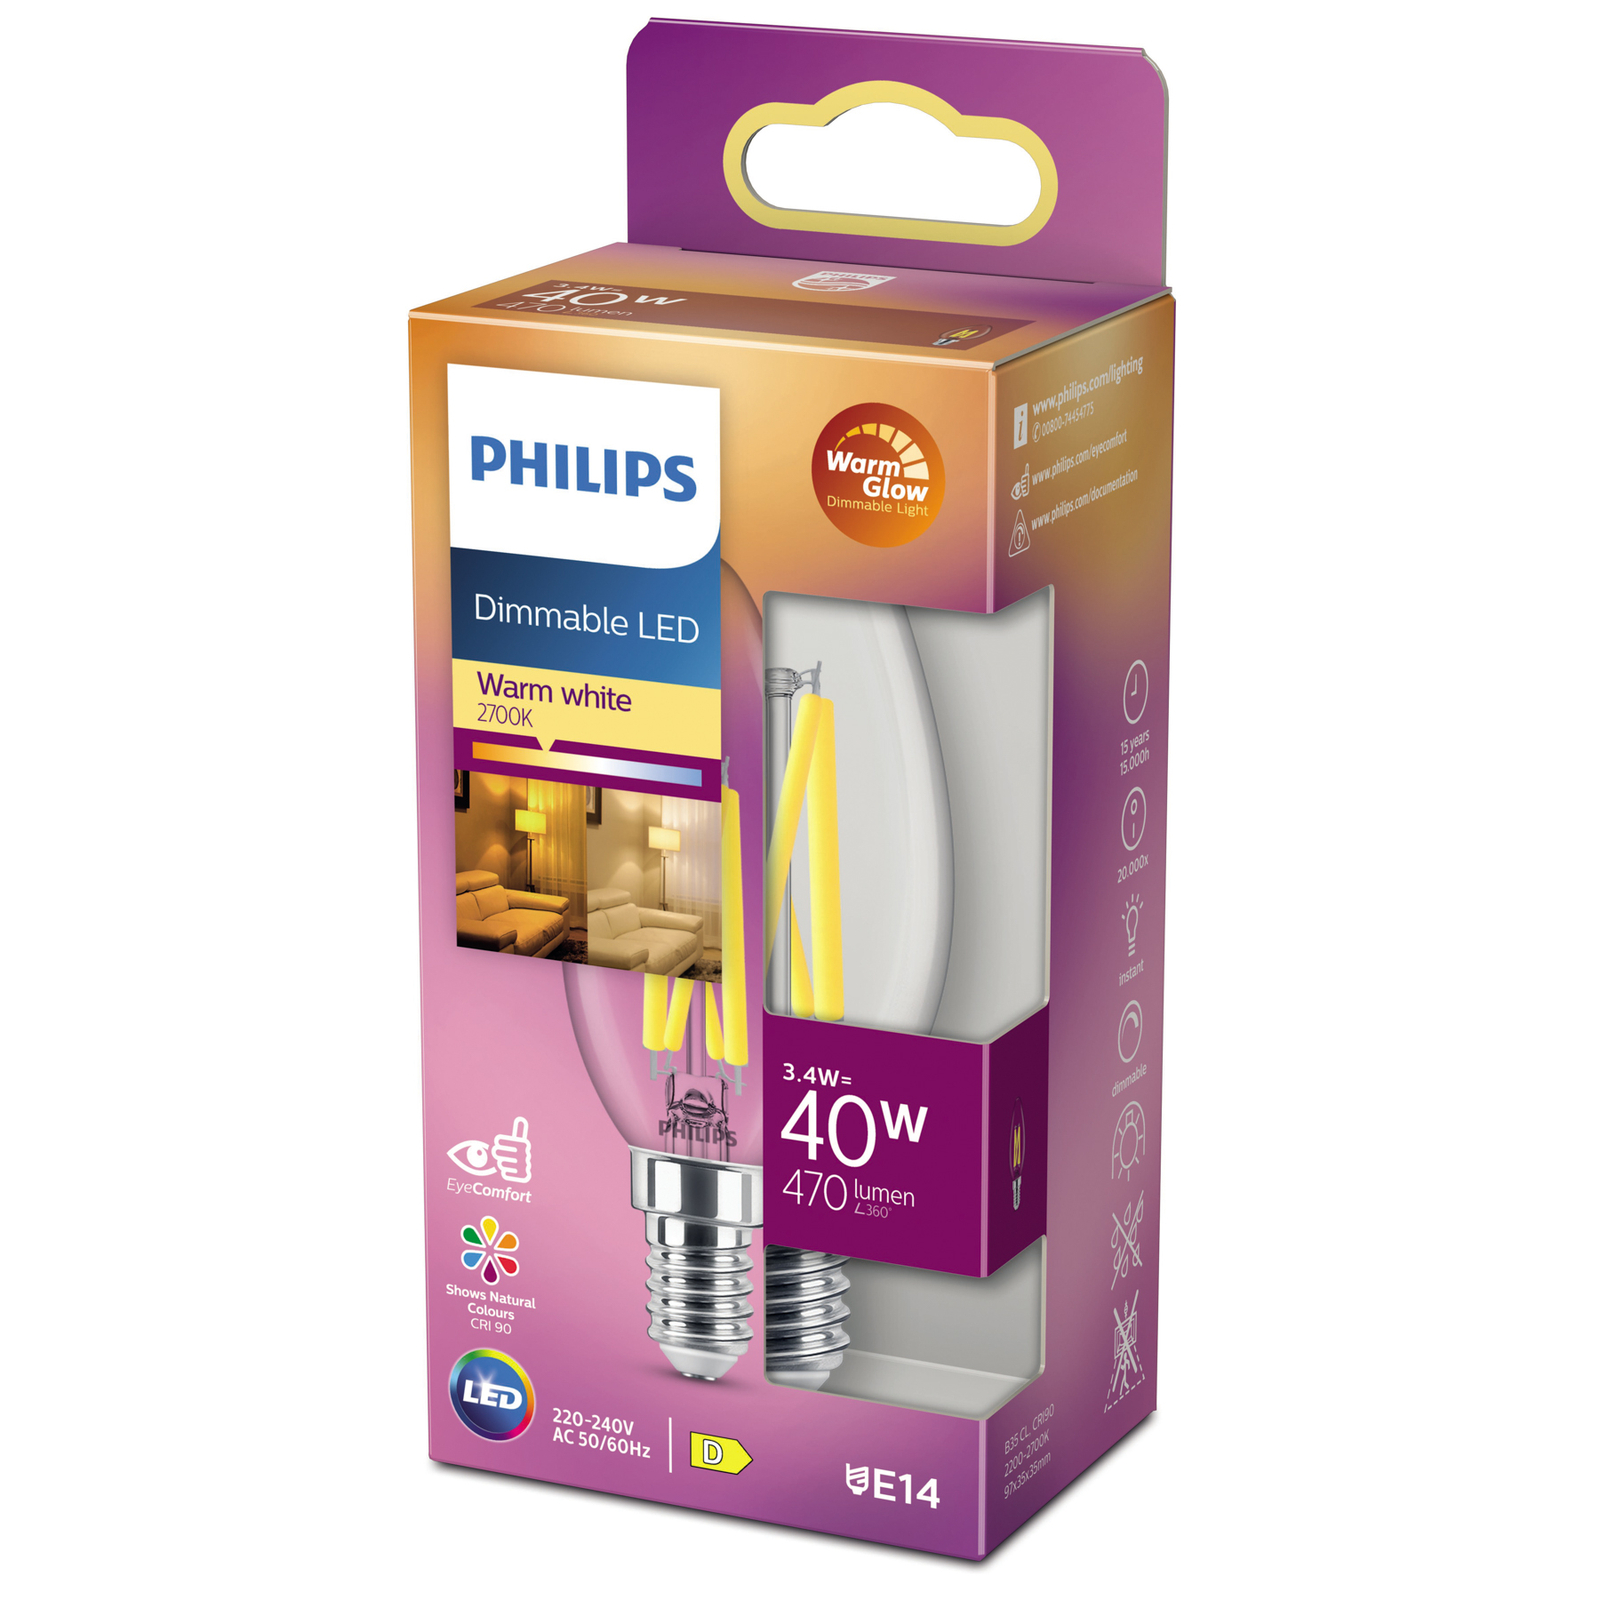 Philipsova žarnica LED, E14 B35, 3,4 W, 2.700 K, WarmGlow